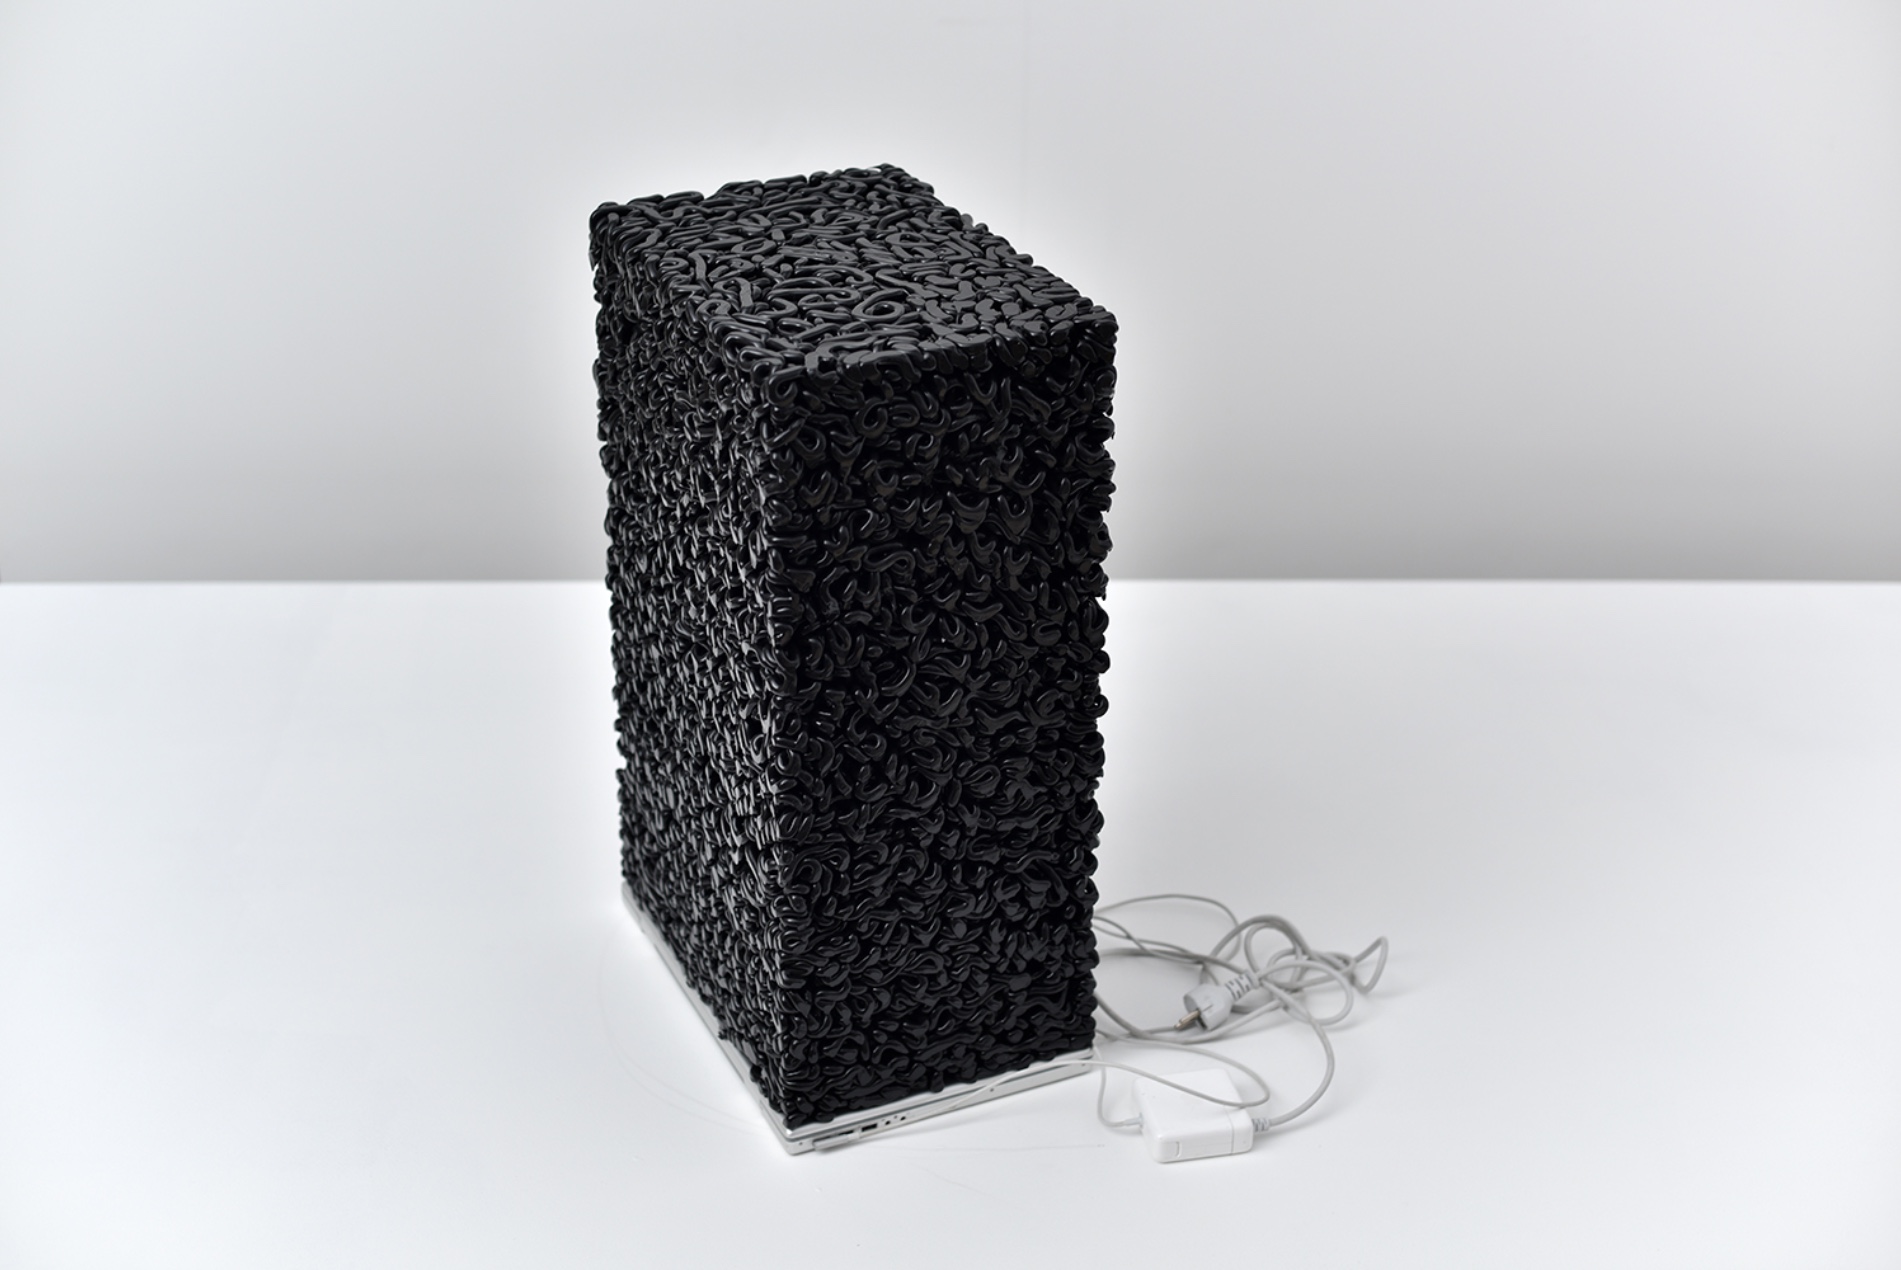 Jonathan Callan, Dark Matter (2016) - Silicon and Laptop 64.5 x 39 x 26 cm